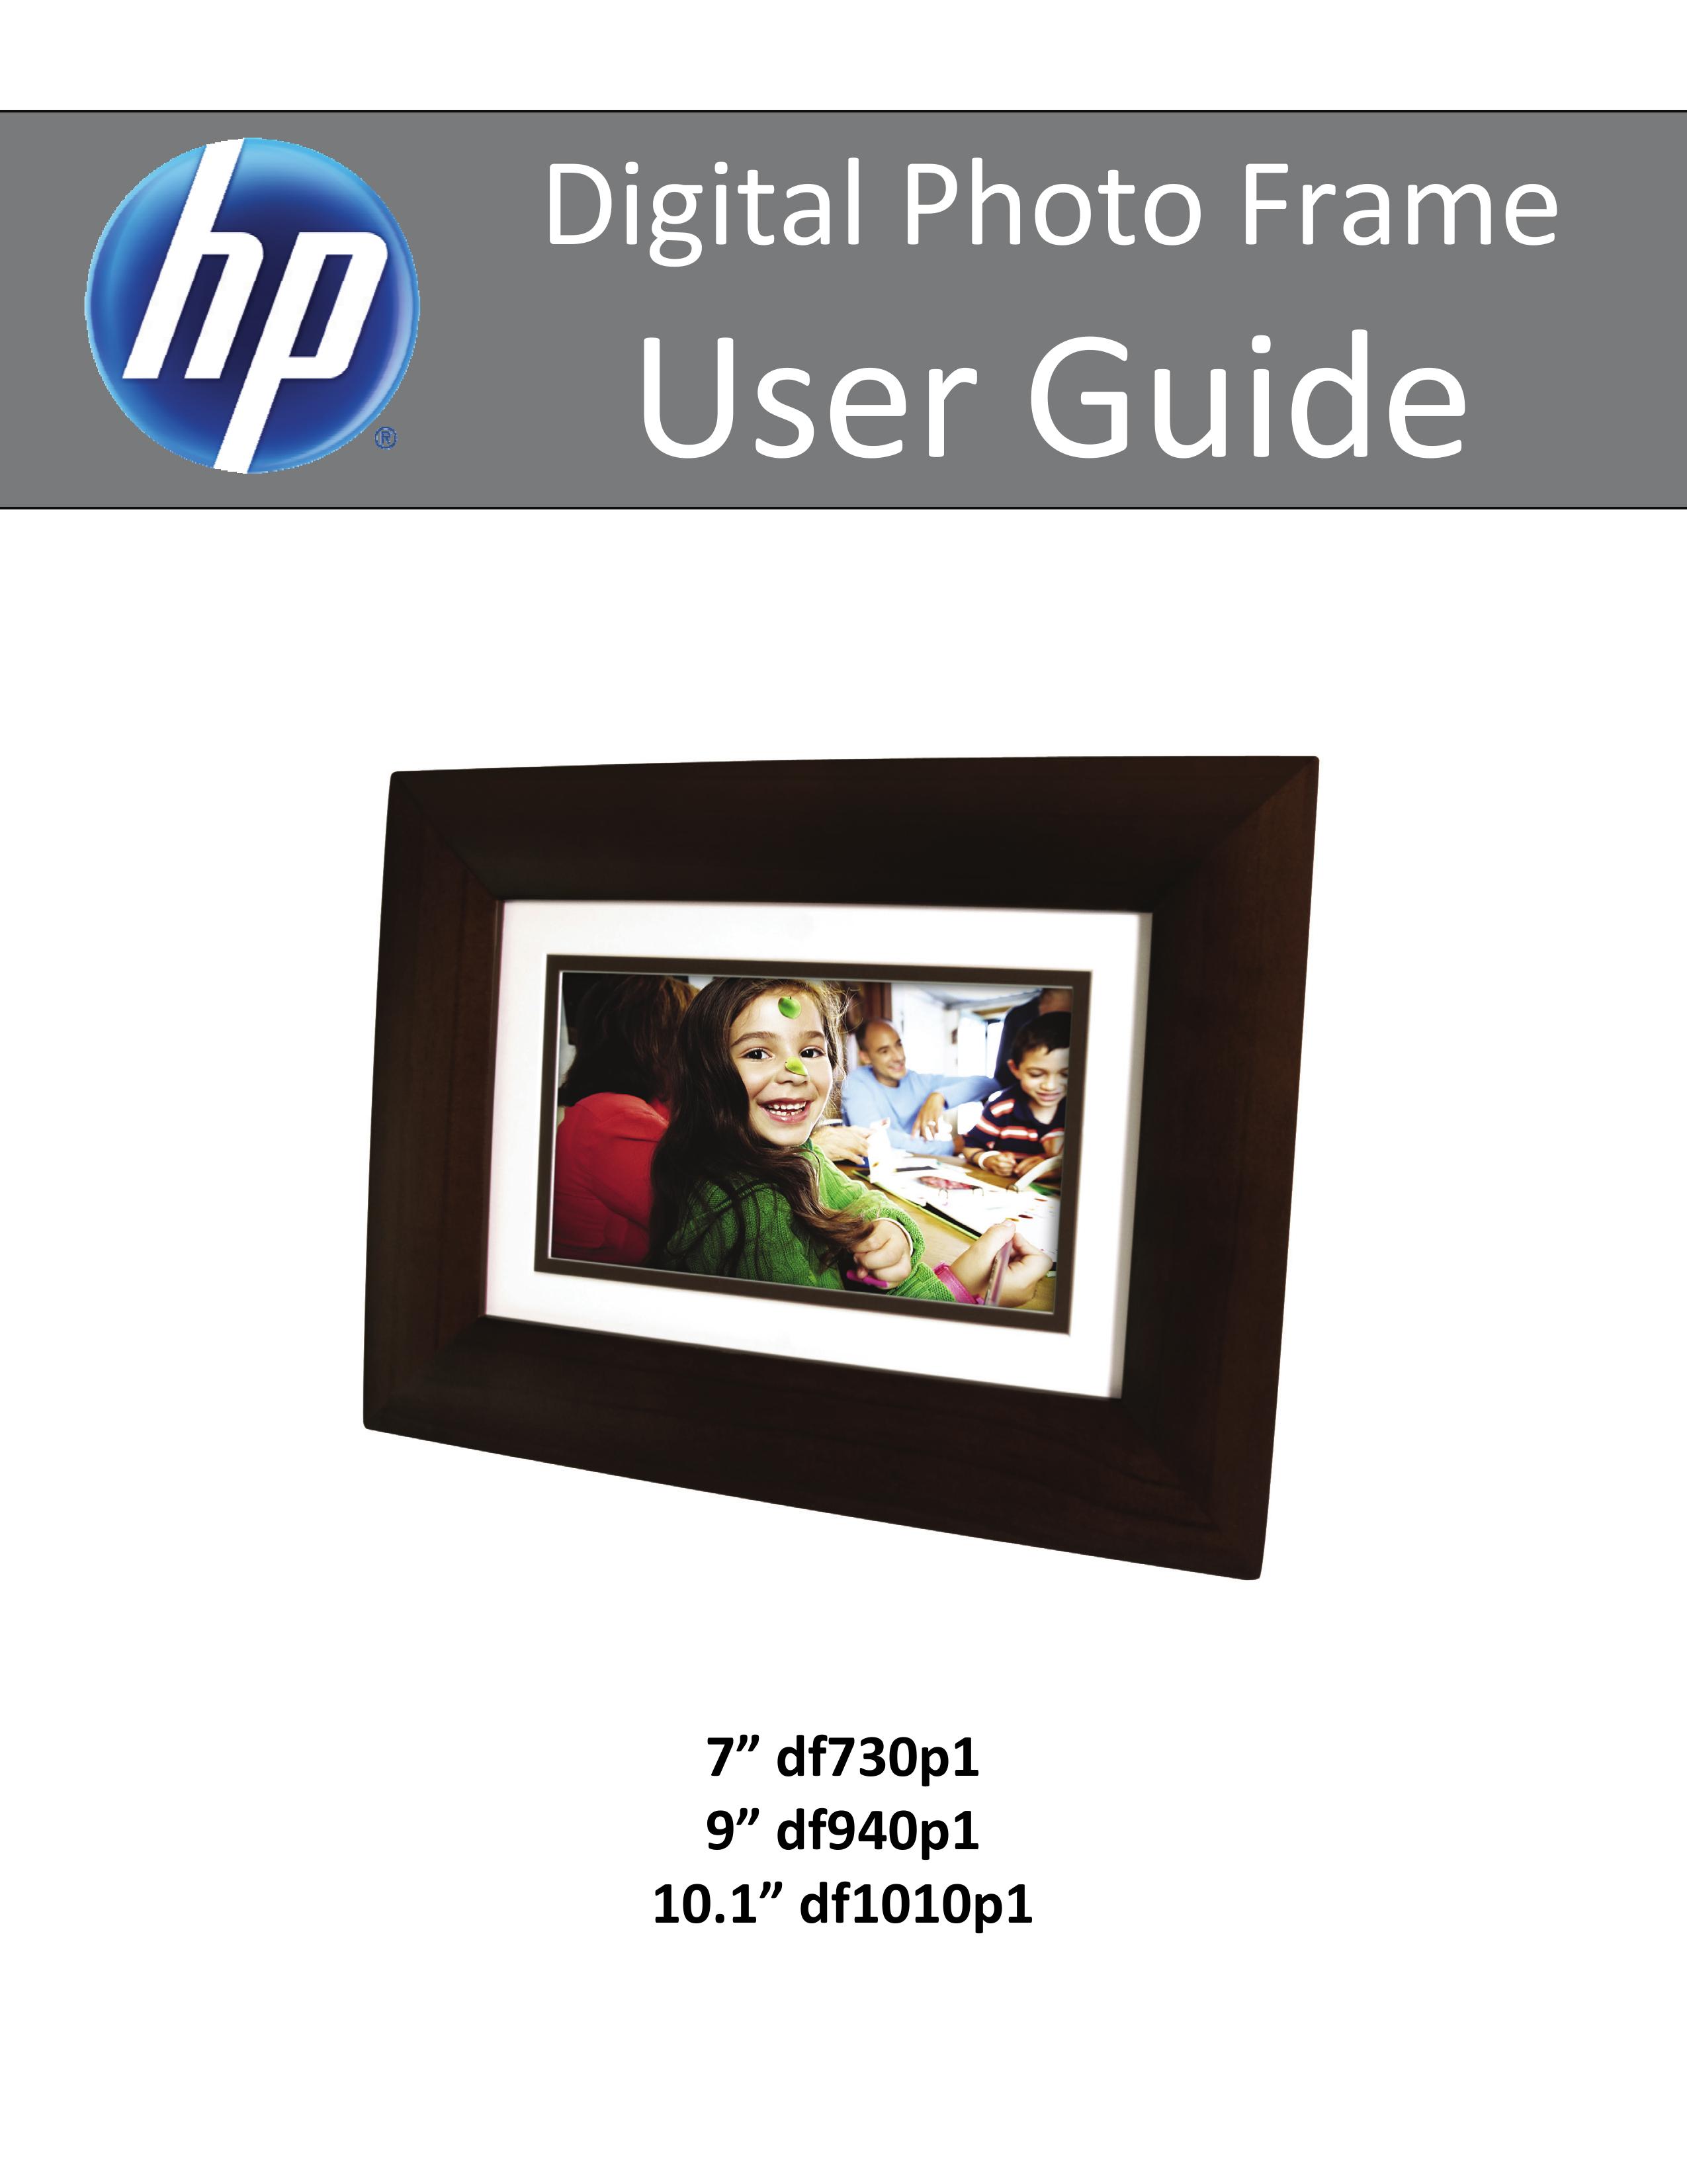 HP (Hewlett-Packard) HPDF1010P1 Digital Photo Frame User Manual